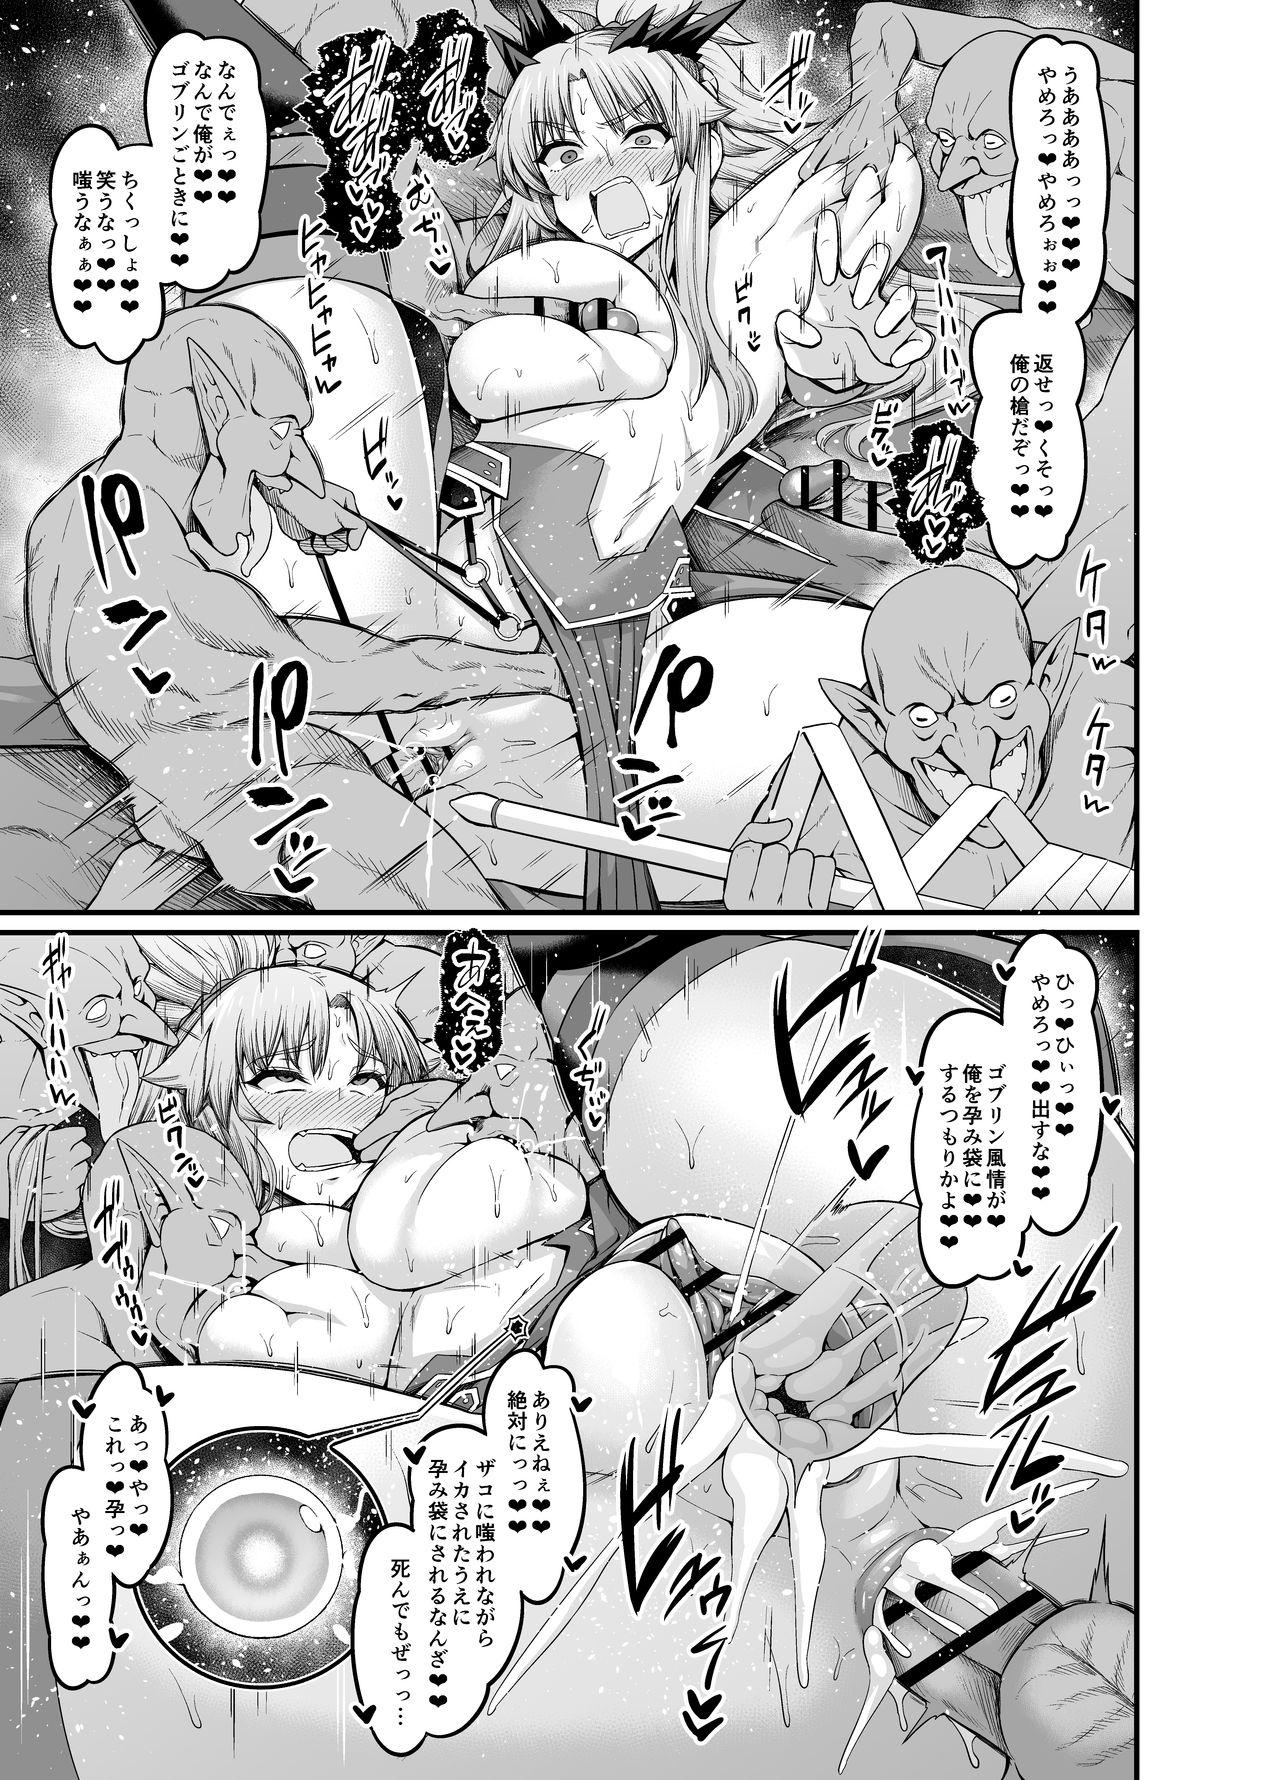 Skirt Bakunyū Ransāmōdoreddo vs Goburin - Fate grand order Sex Party - Page 2